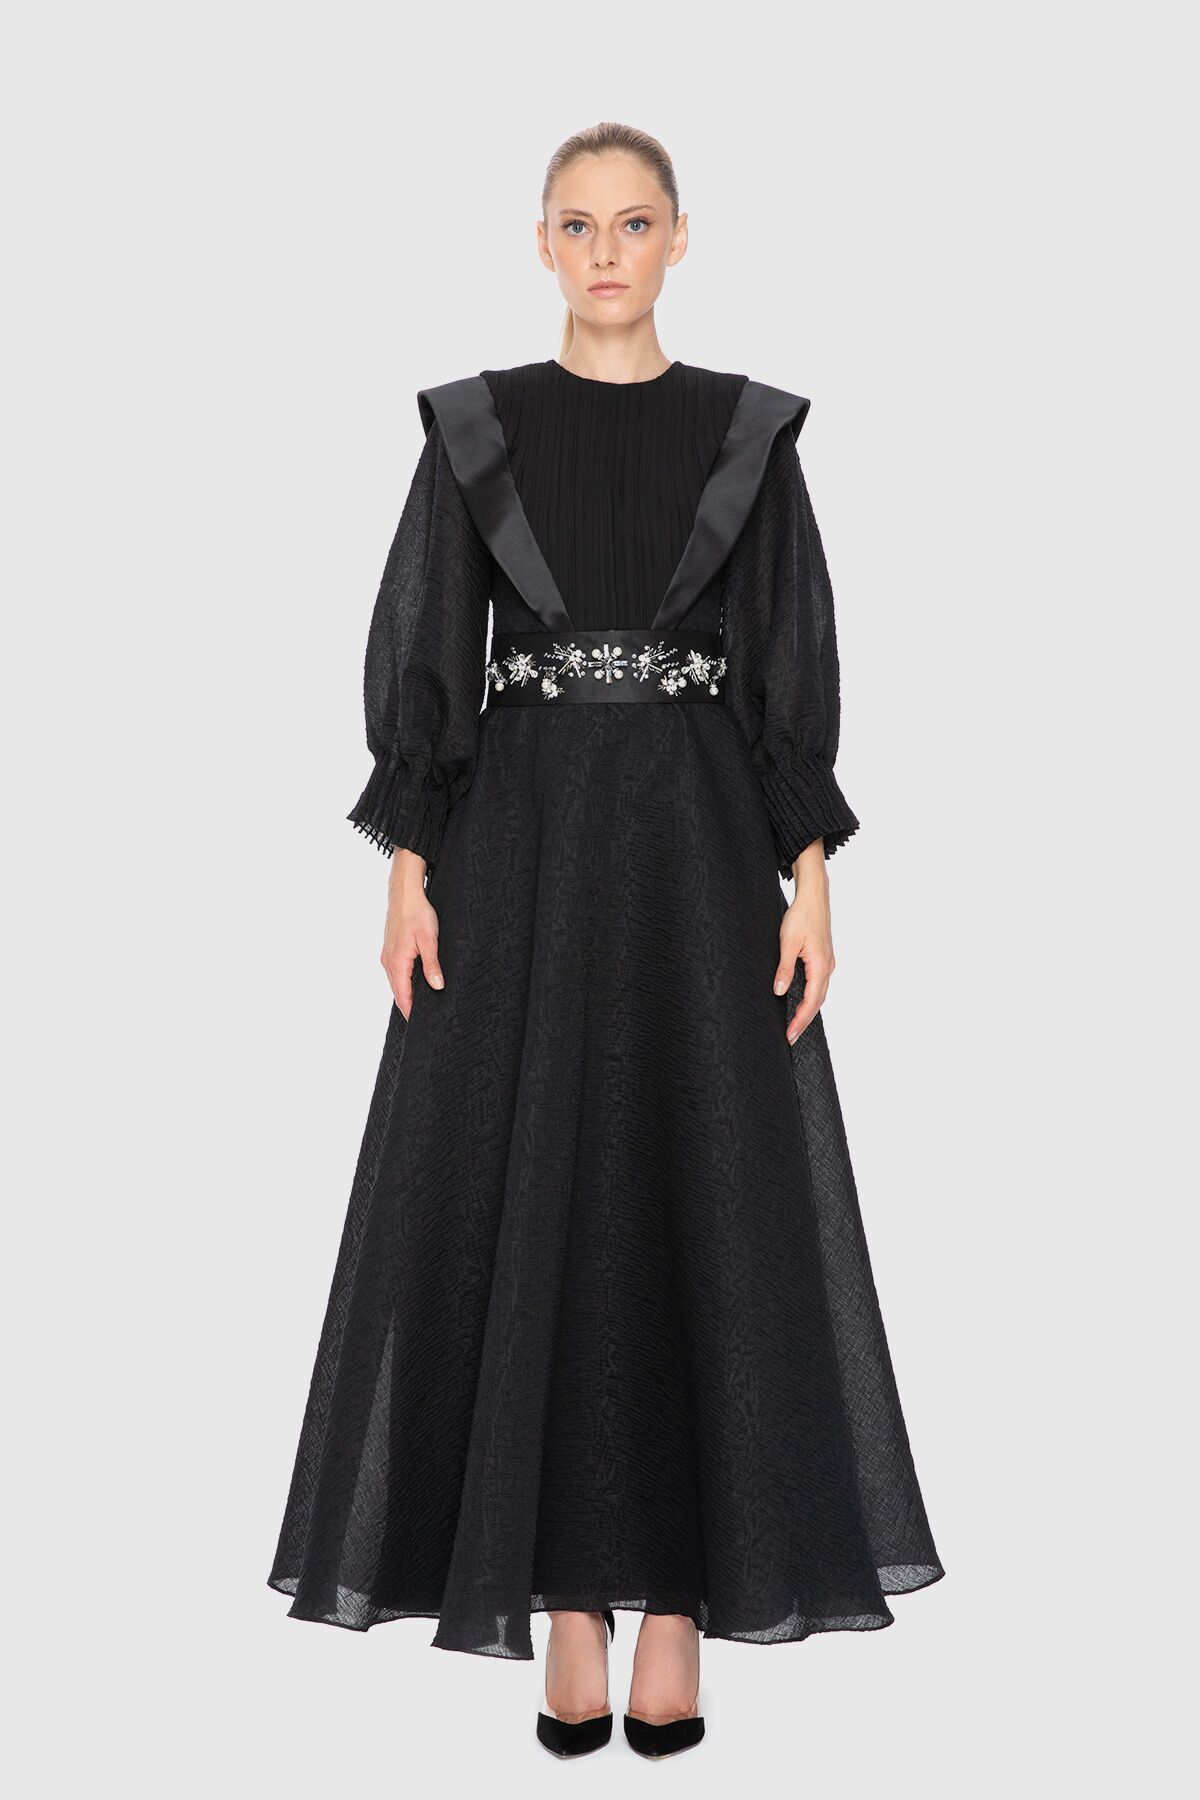  GIZIA - İşleme Detaylı Transparan Detaylı Uzun Siyah Elbise